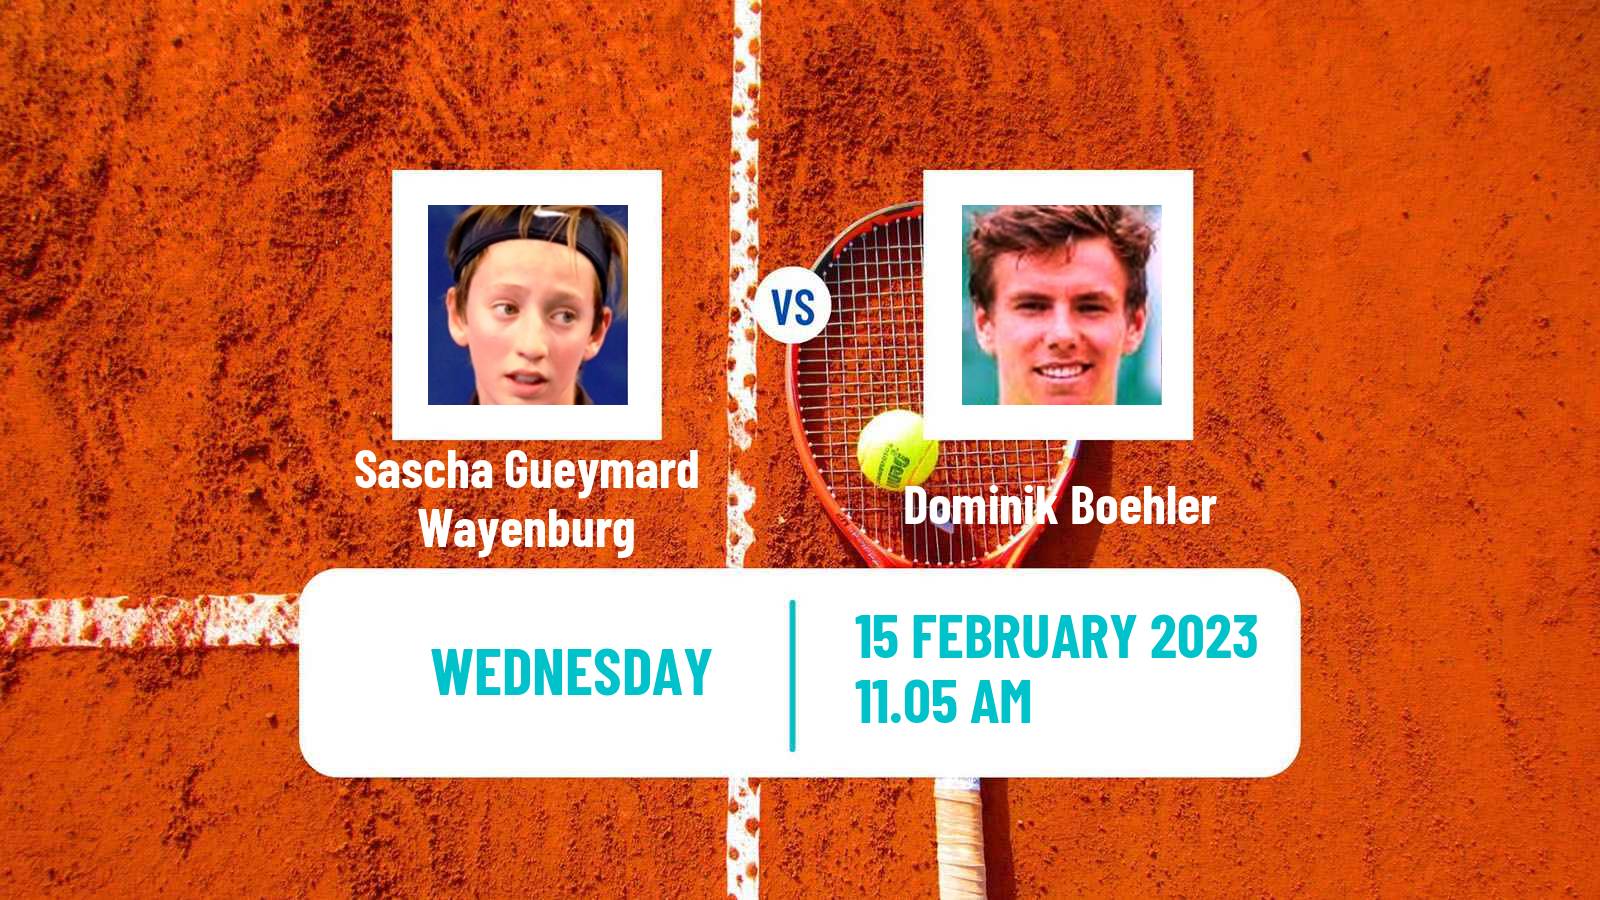 Tennis ITF Tournaments Sascha Gueymard Wayenburg - Dominik Boehler